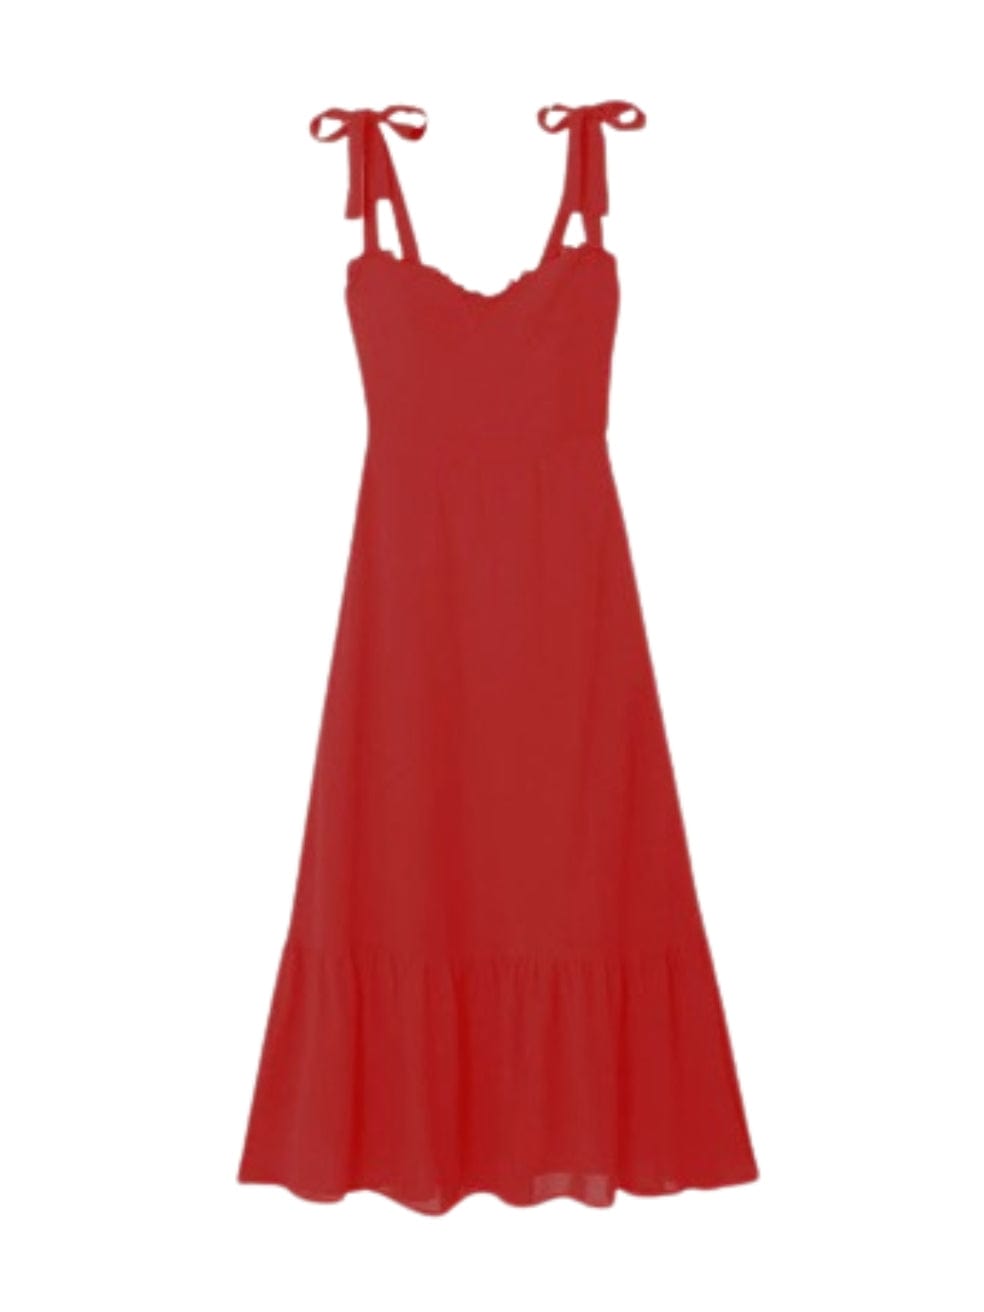 Nadira Dress in Red